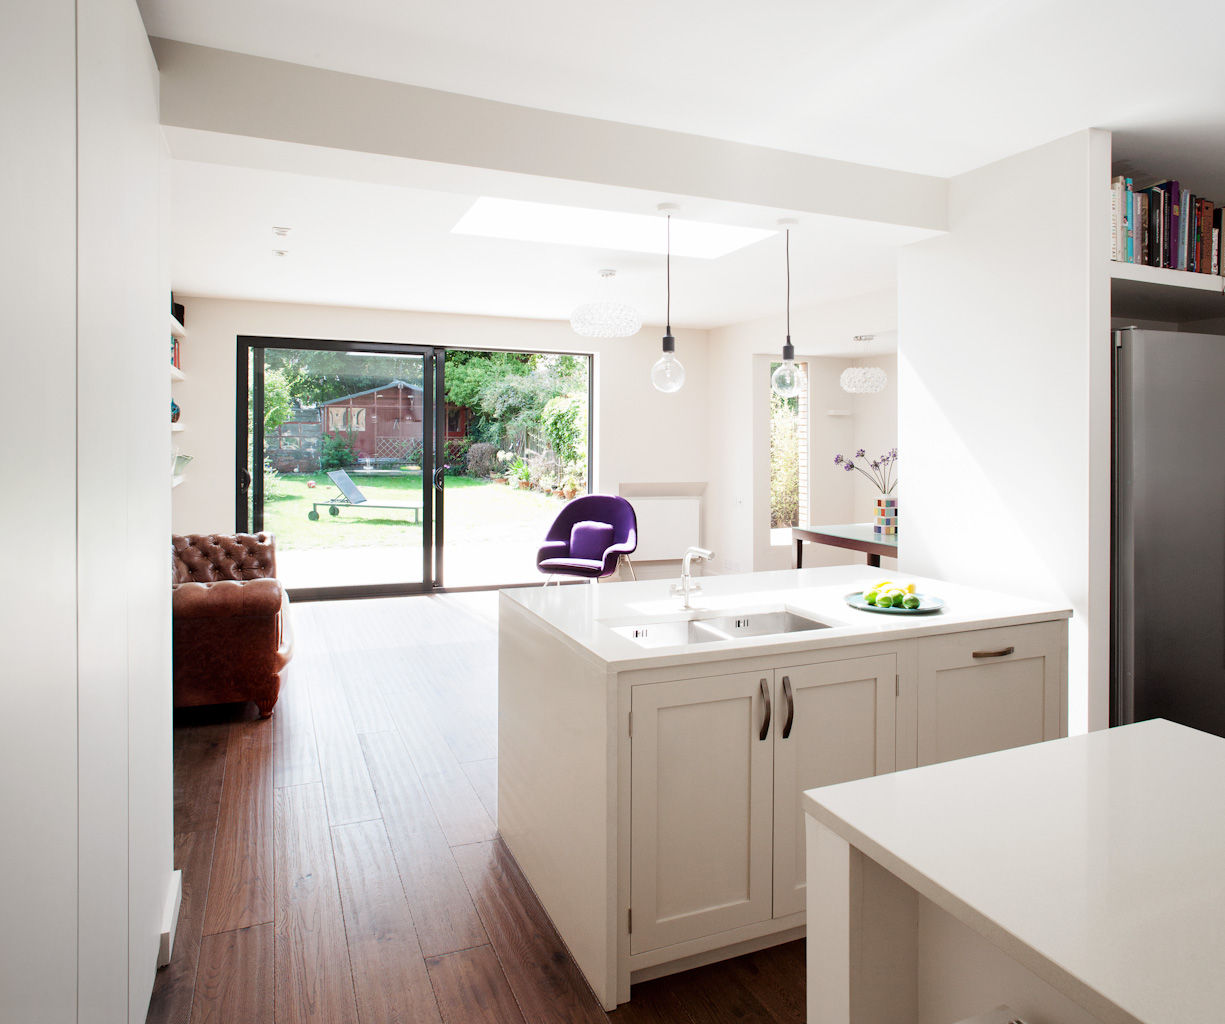 The Kitchen and the Living Room Francesco Pierazzi Architects Cocinas de estilo moderno